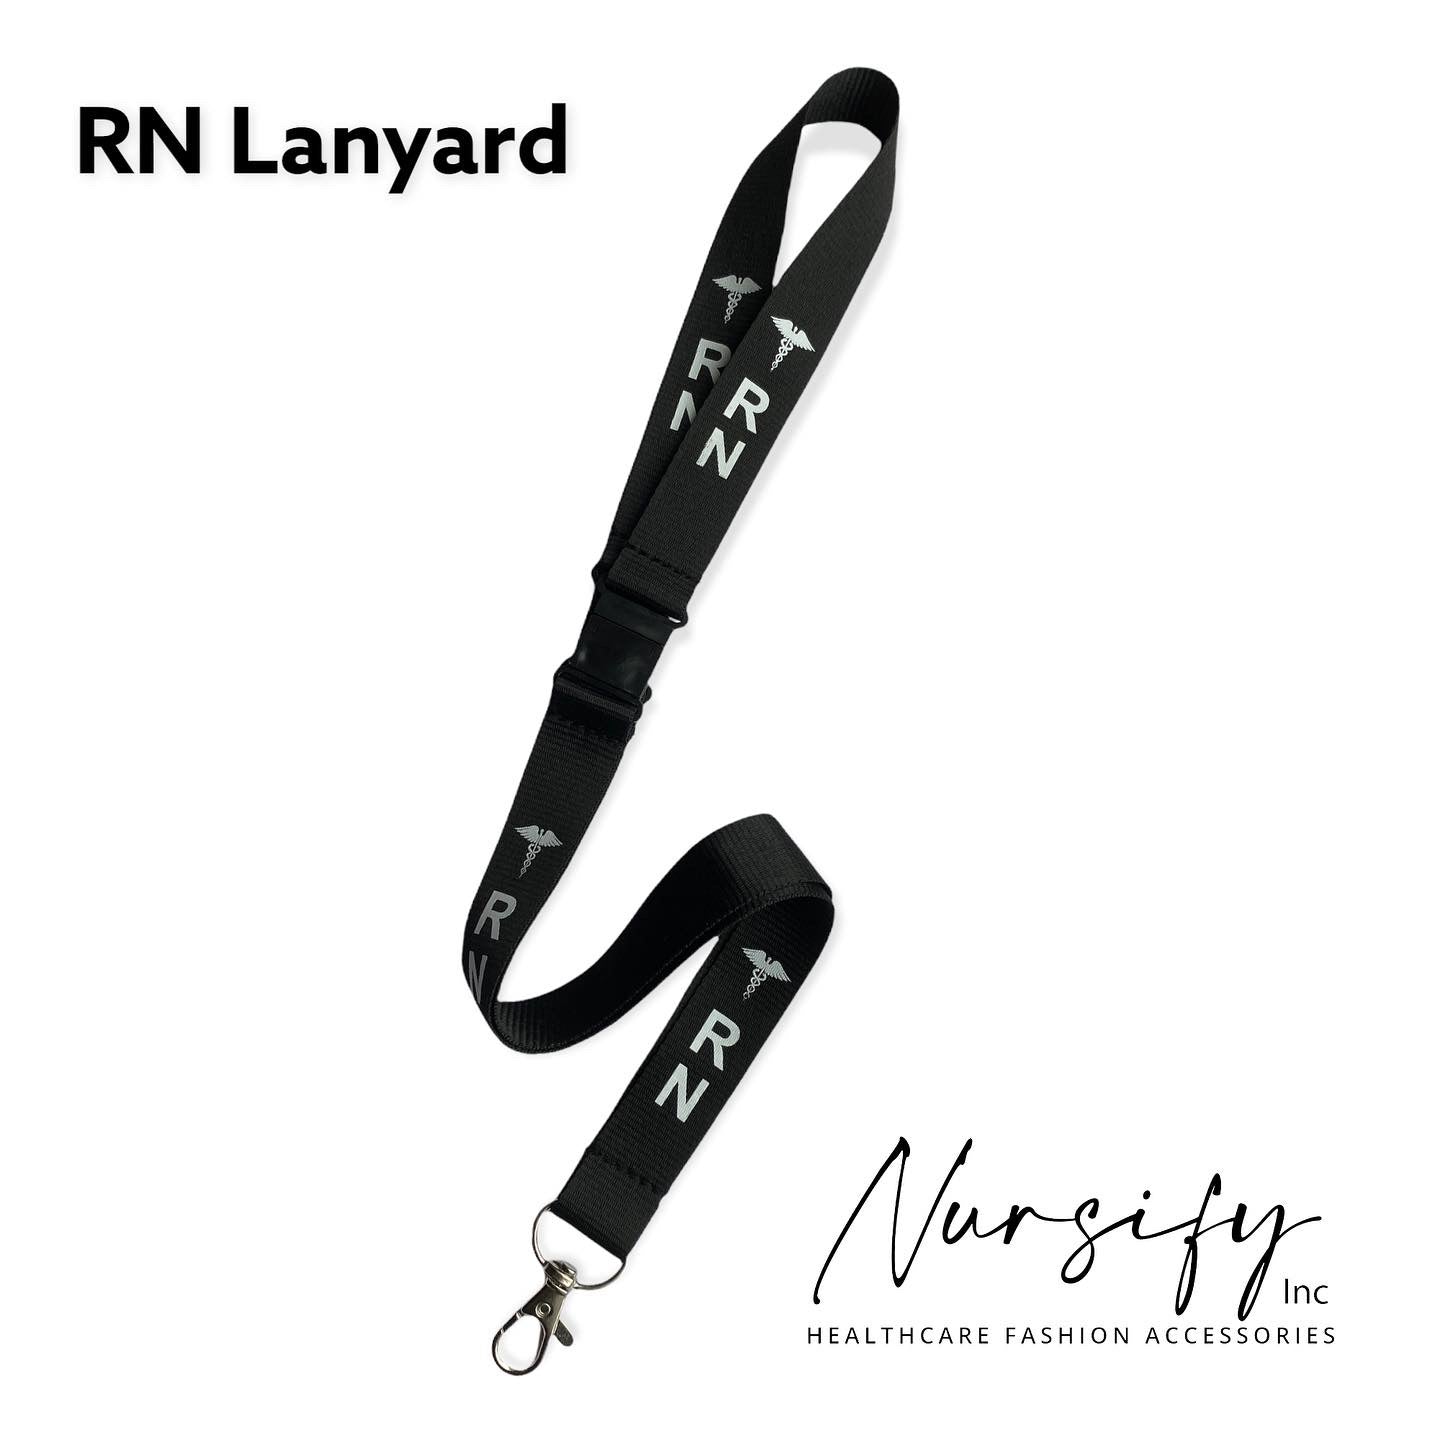 RN GRADUATION GIFT, 8 piece RN Lanyard Set, Nurse accessories